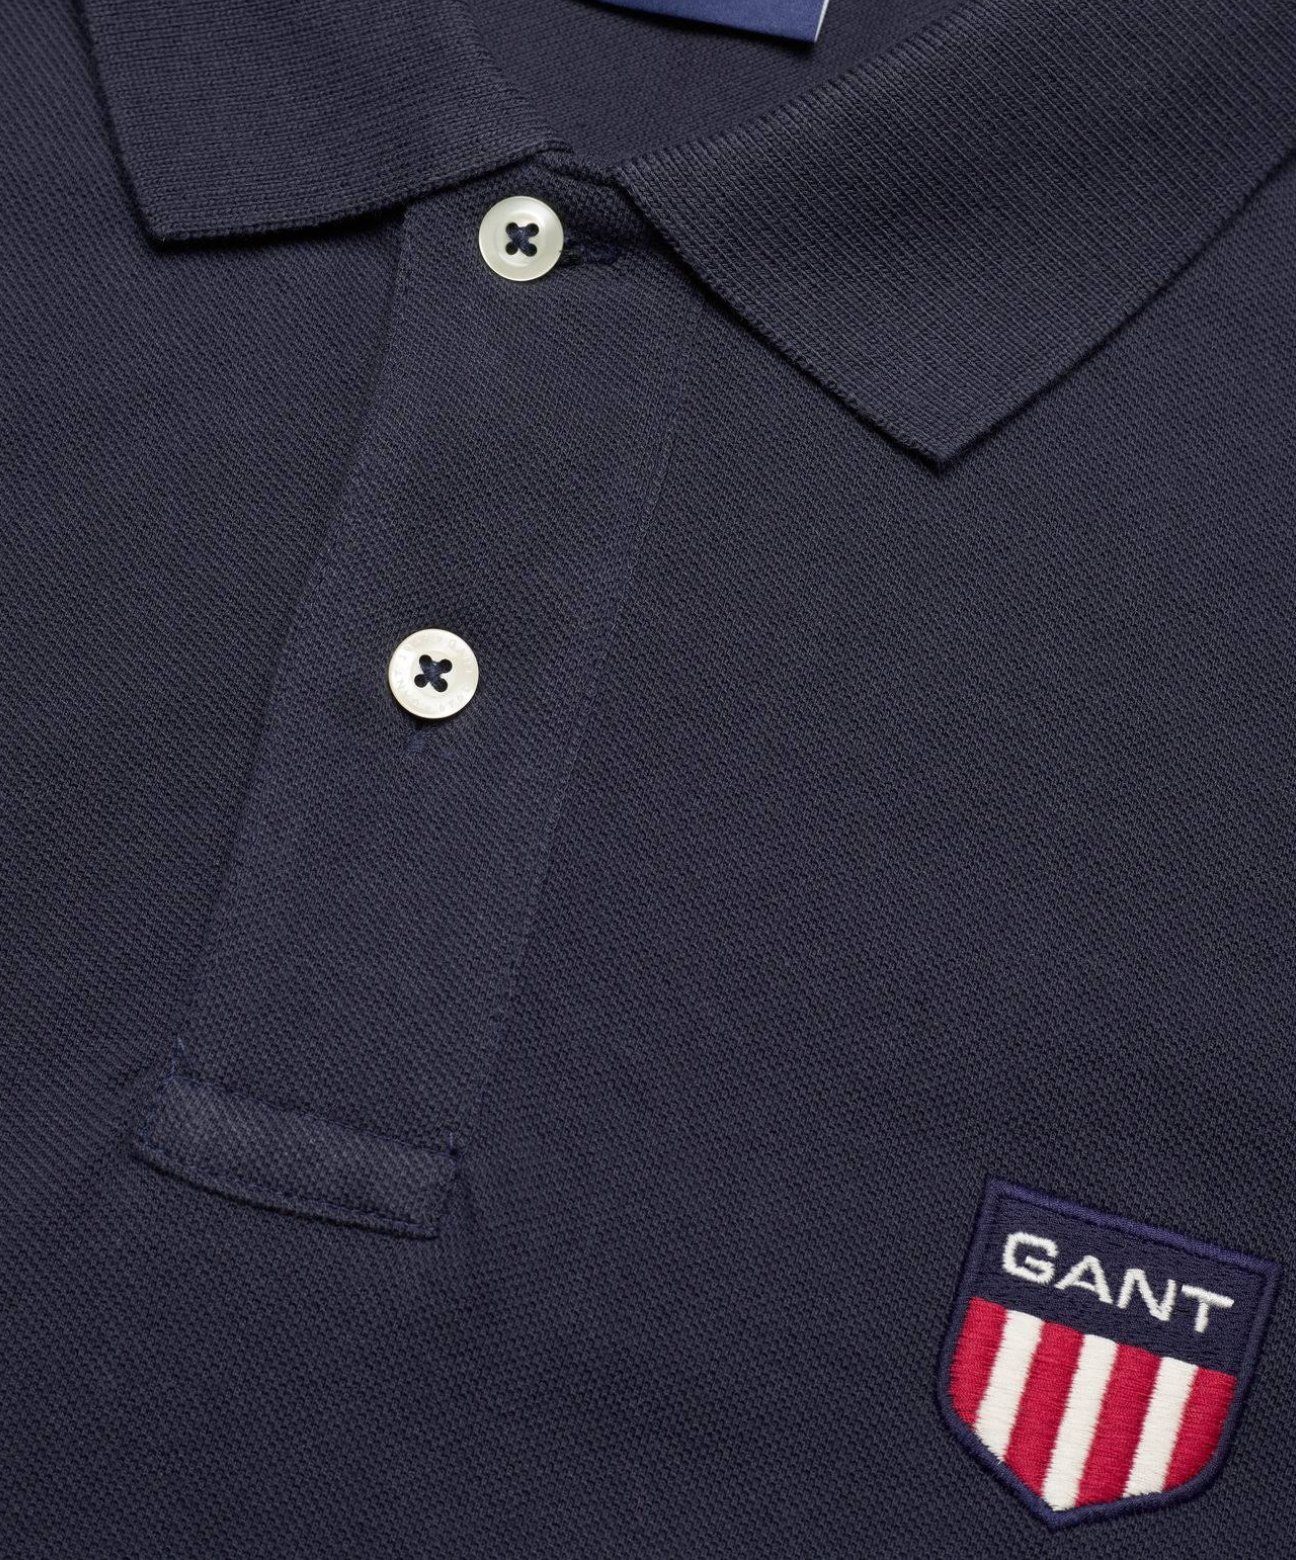 Gant Gant-Poloshirt-2002022-Navy-L Poloshirt